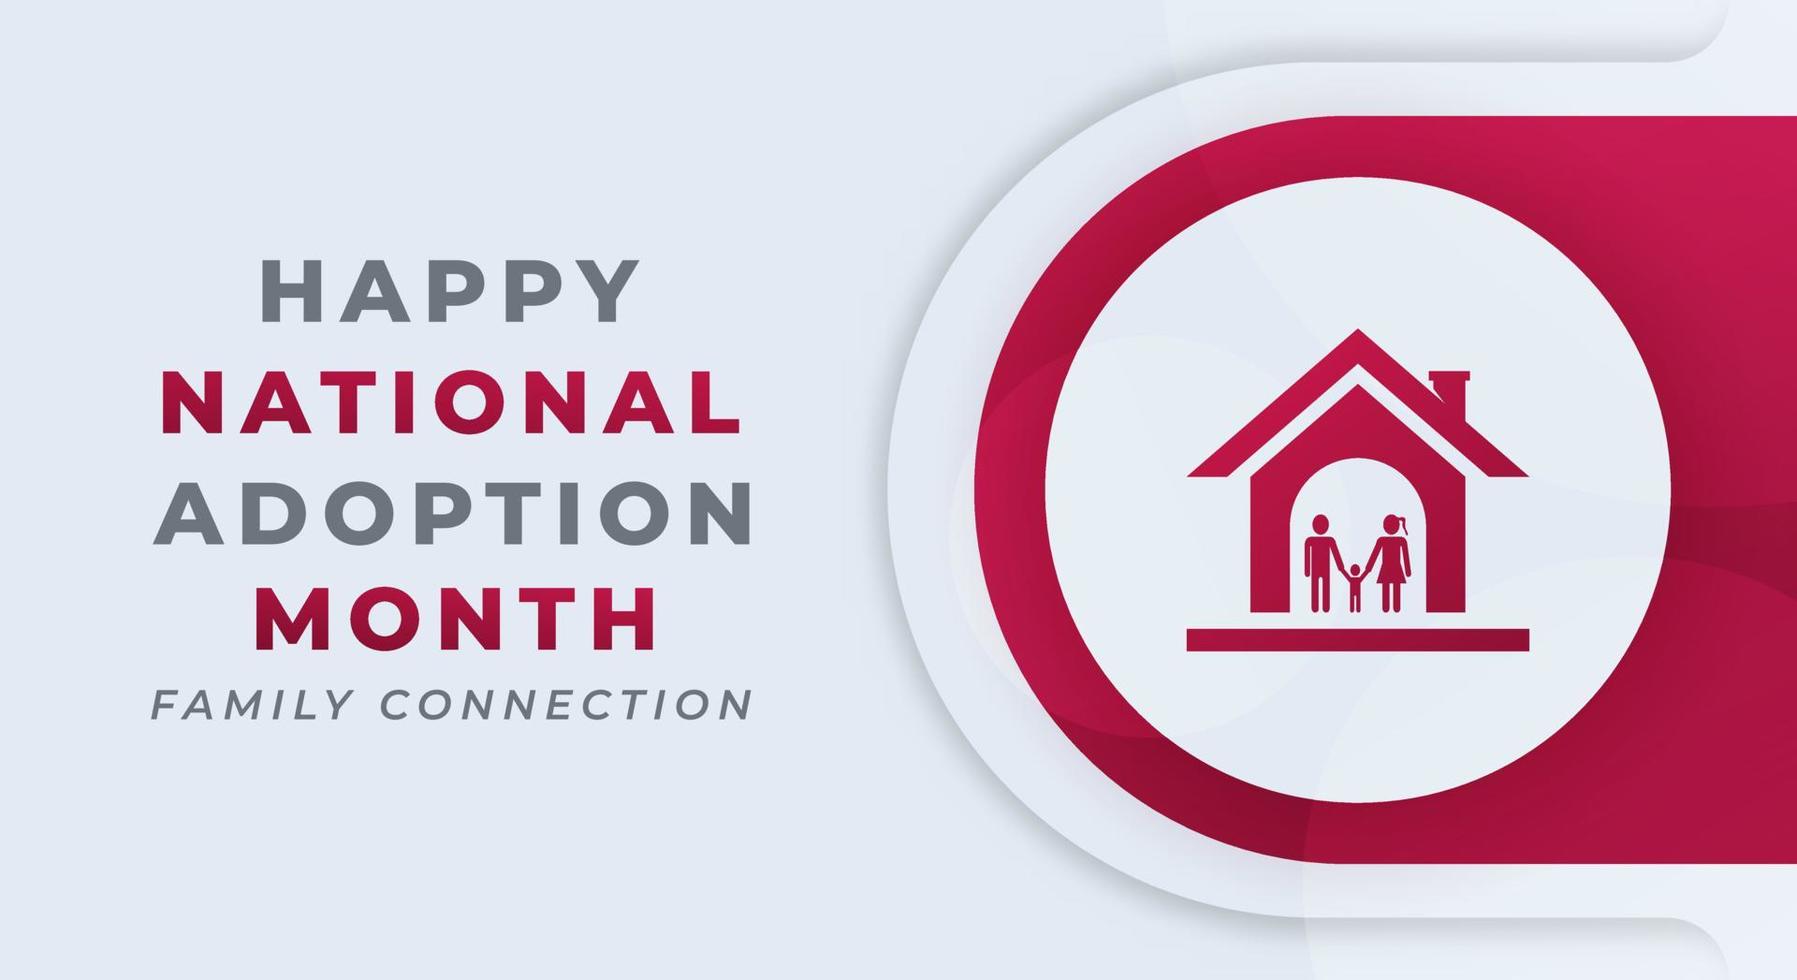 Happy National Adoption Month Celebration Vector Design Illustration for Background, Poster, Banner, Advertising, Greeting Card